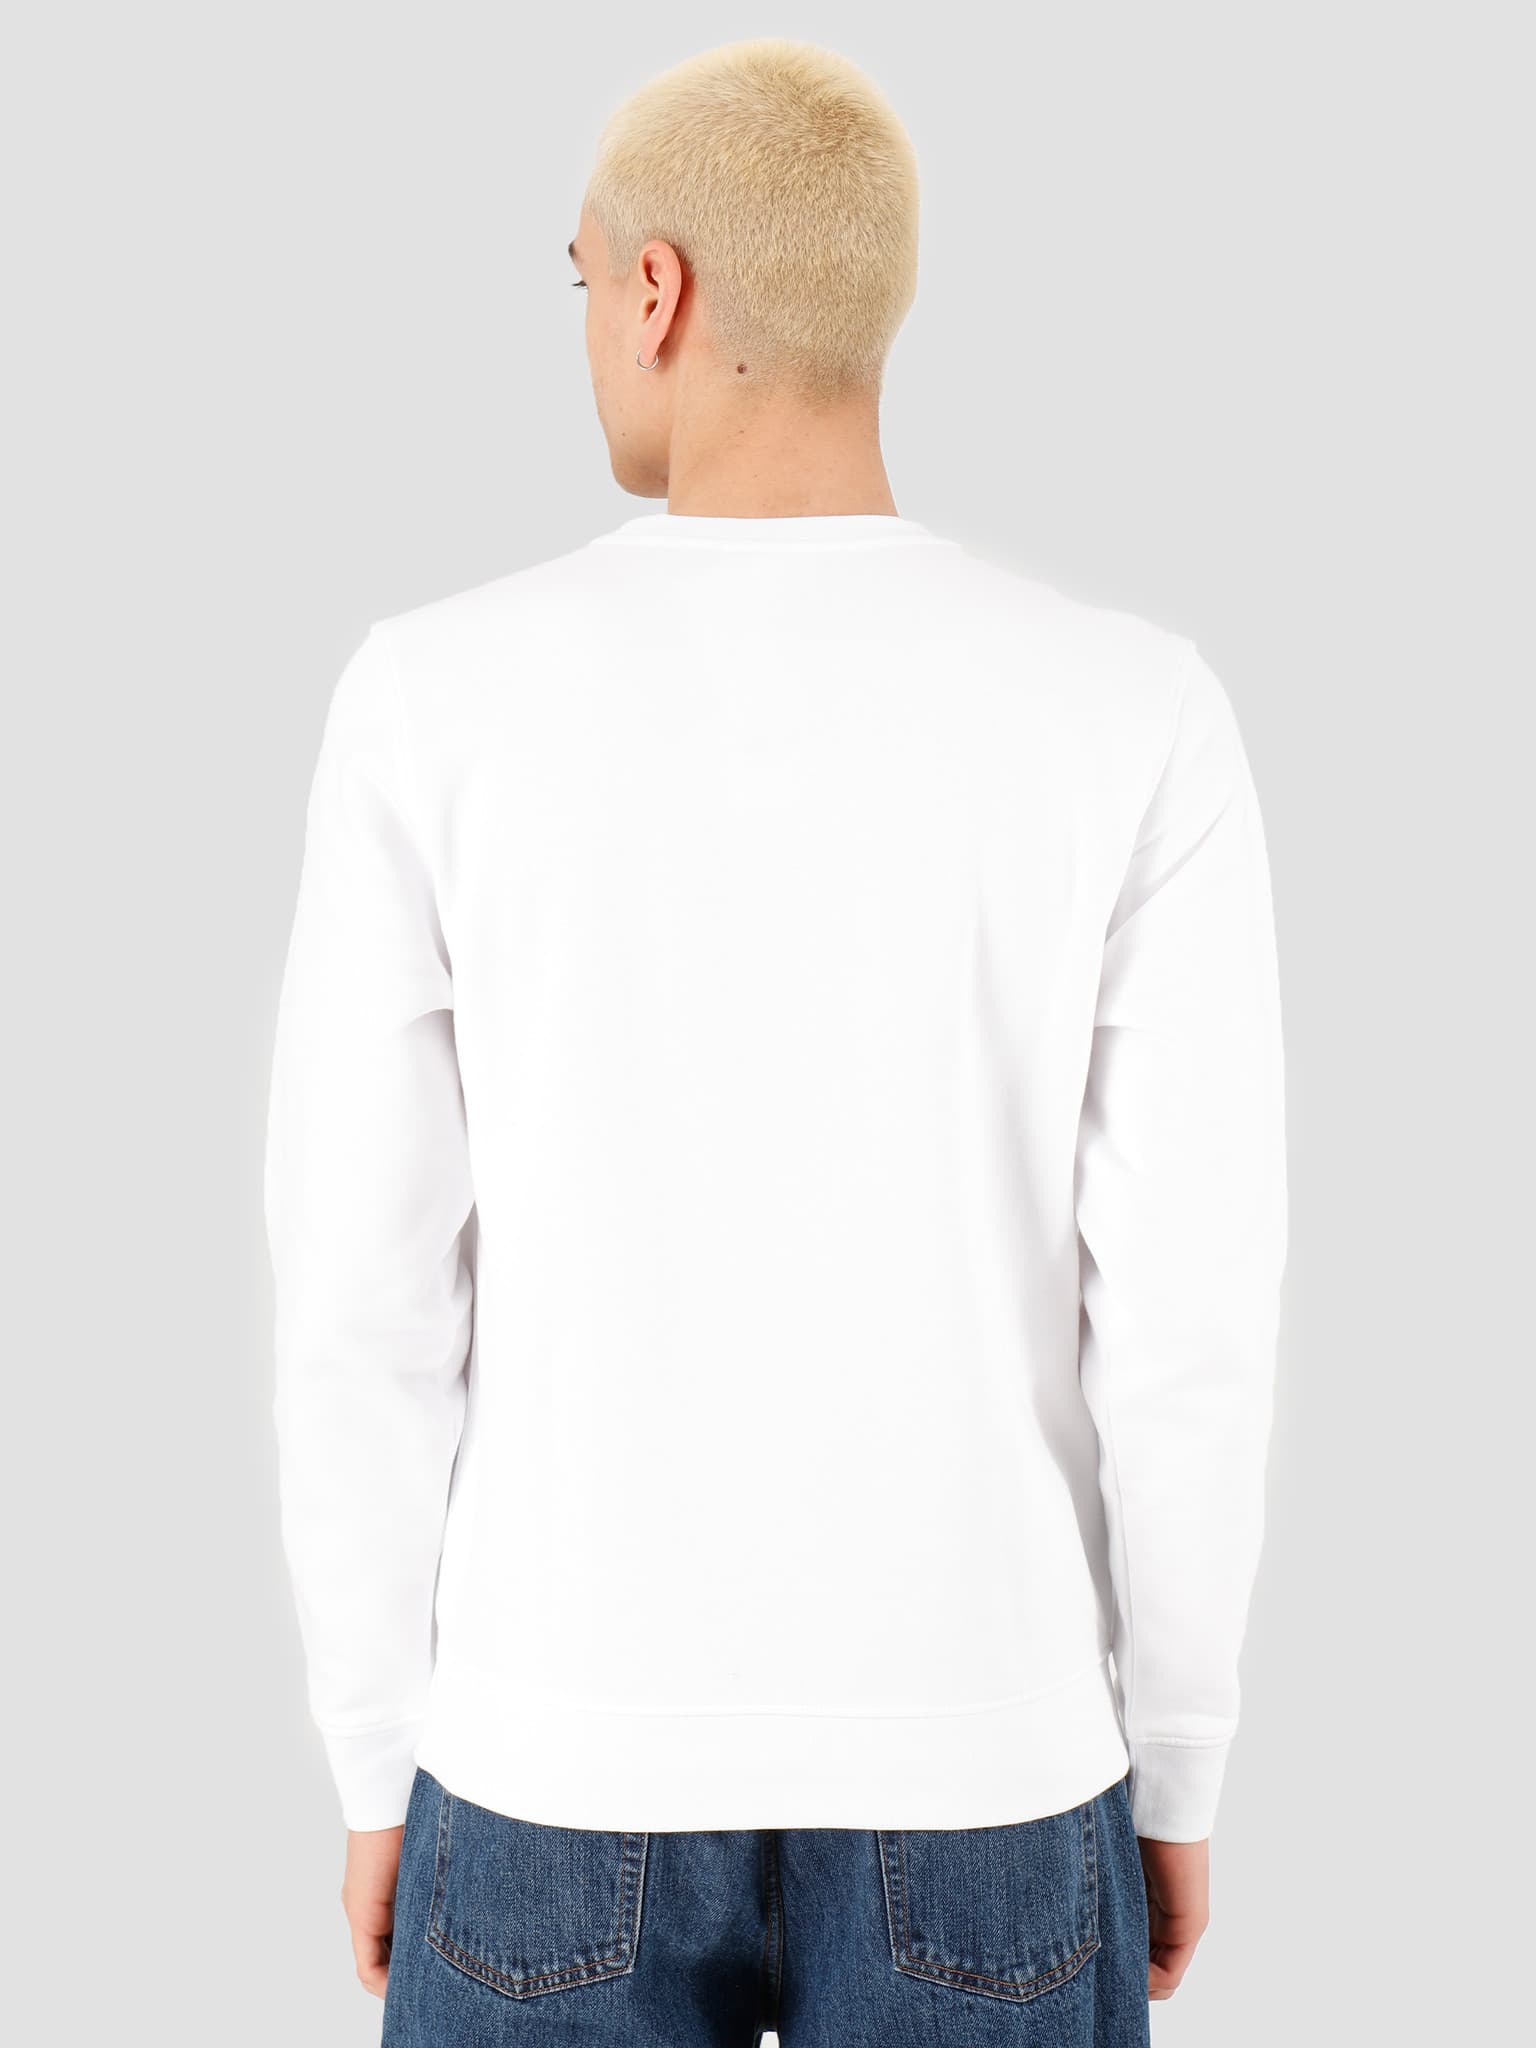 1HS1 Men's sweatshirt 01 White SH7613-01